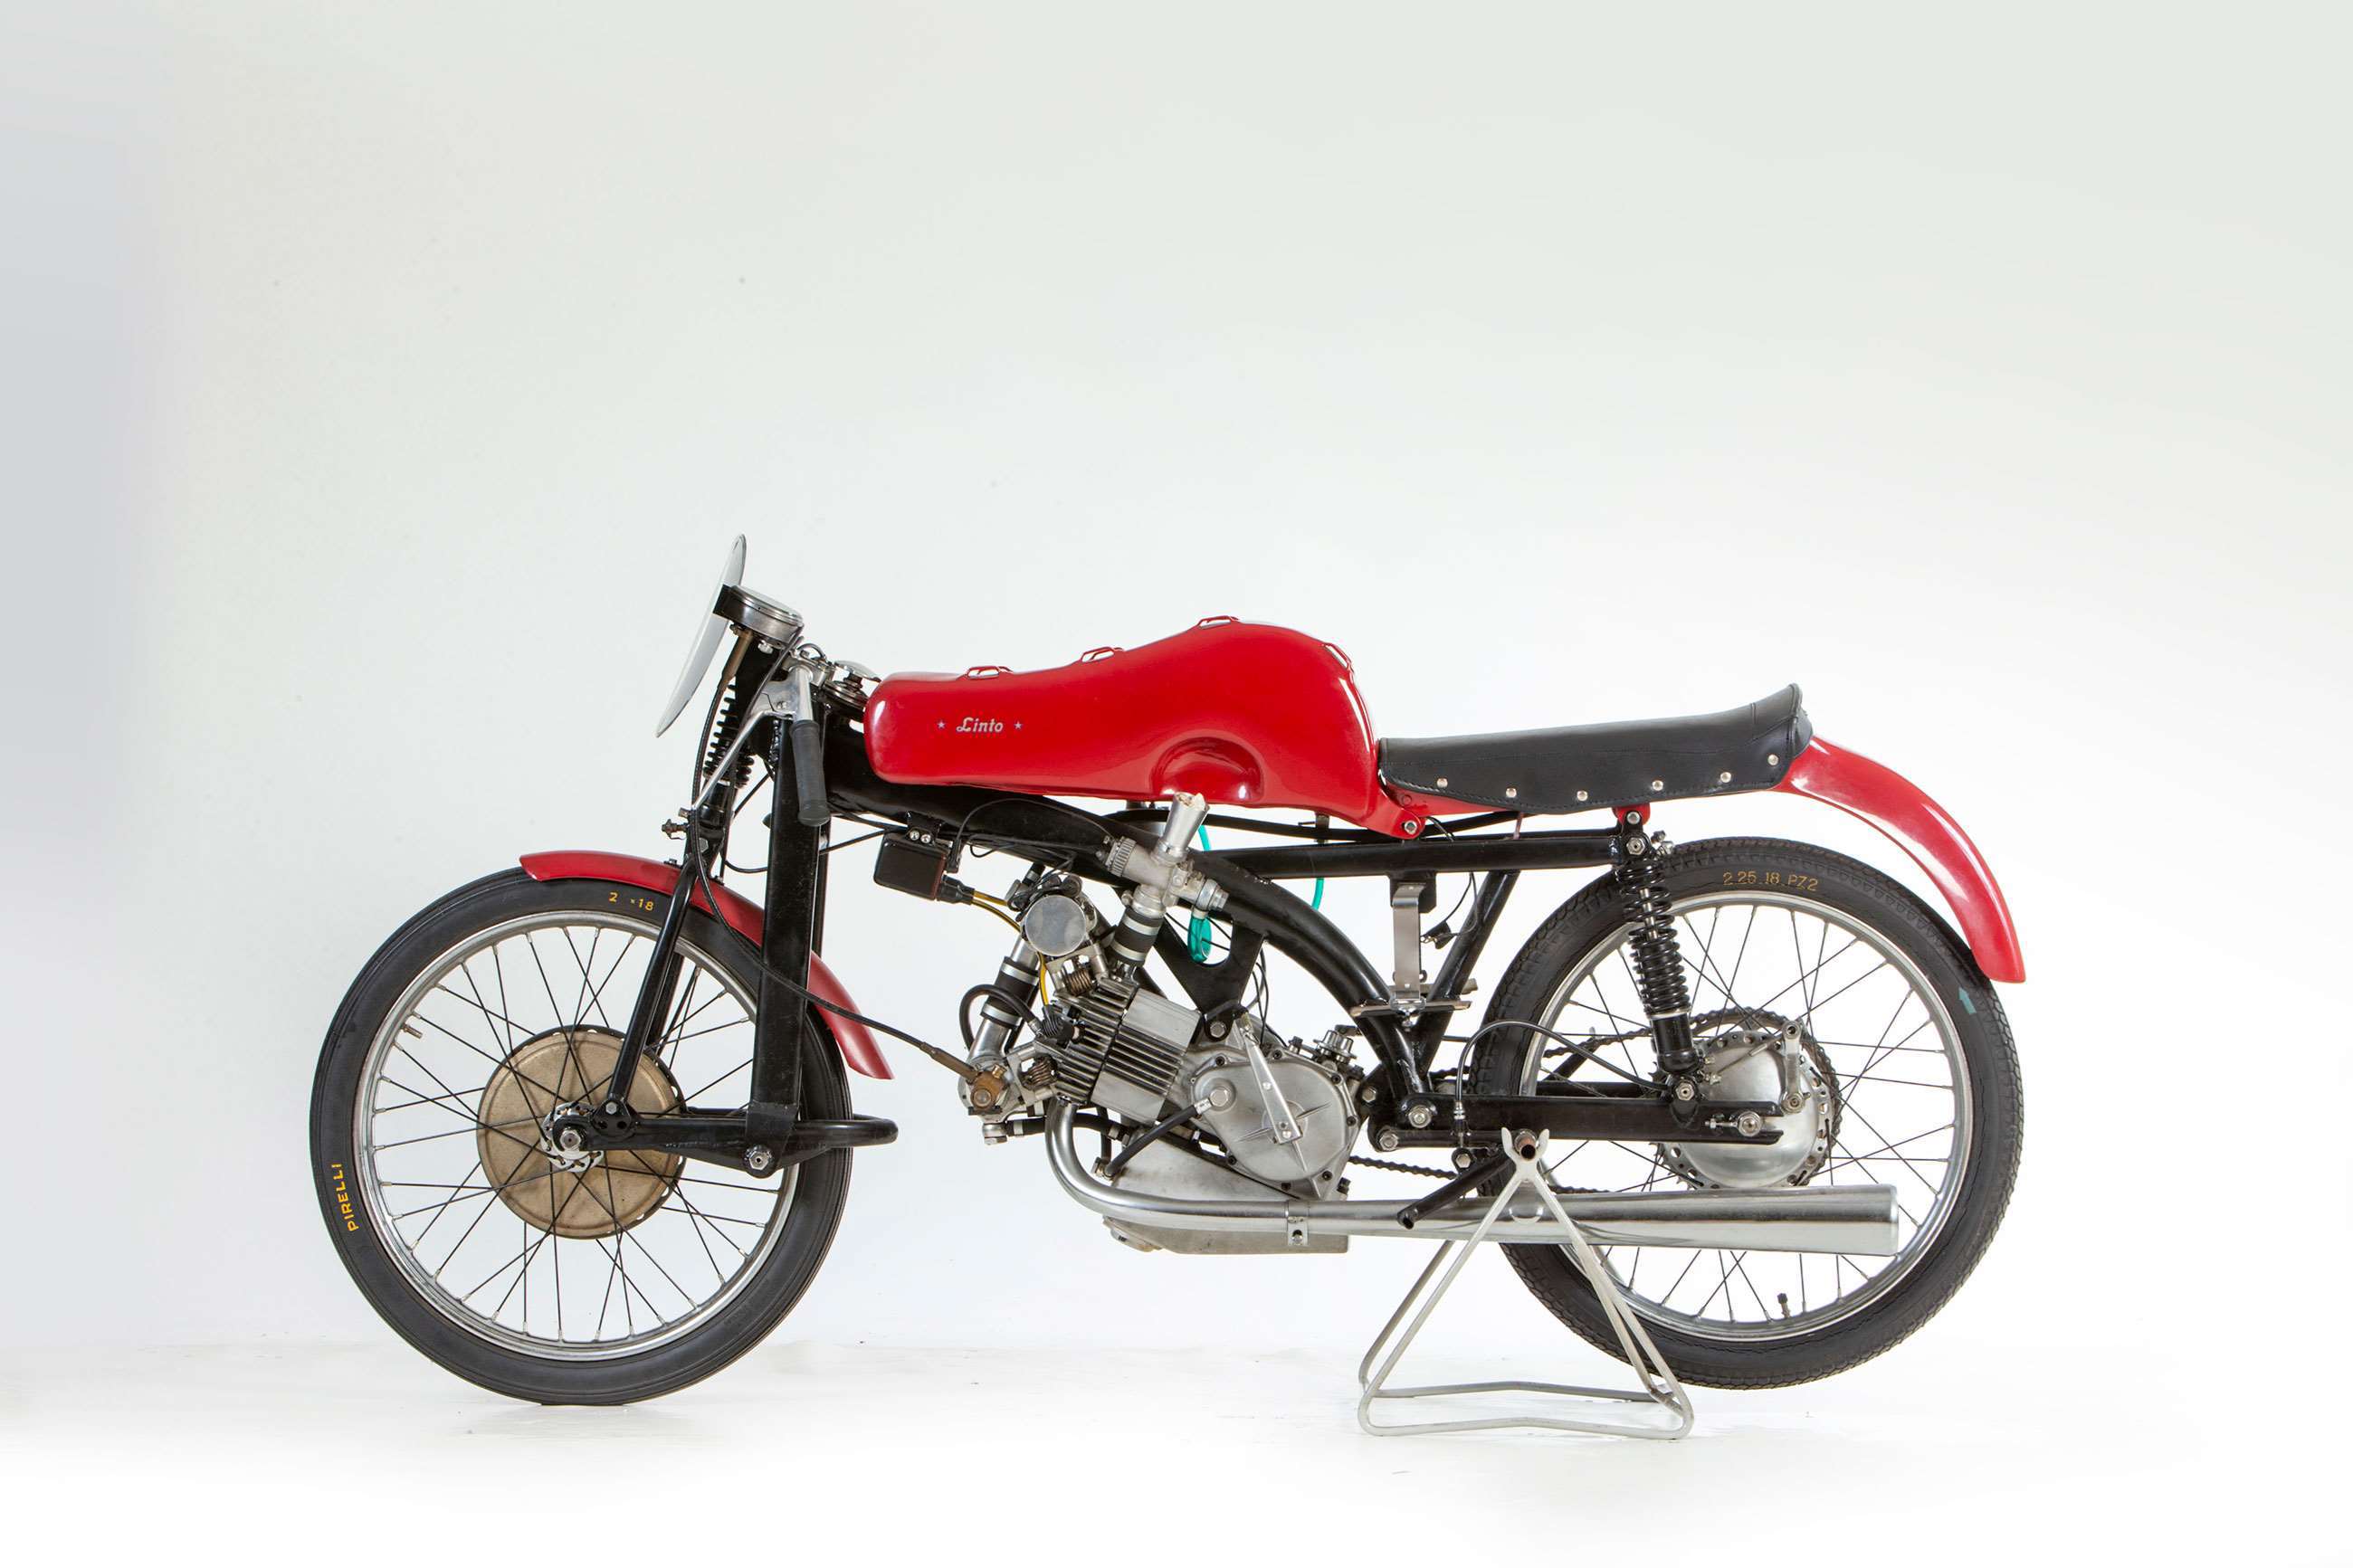 1950-linto-75cc-bialbero-racing-motorcycle-bonhams-goodwood-19022020.jpg